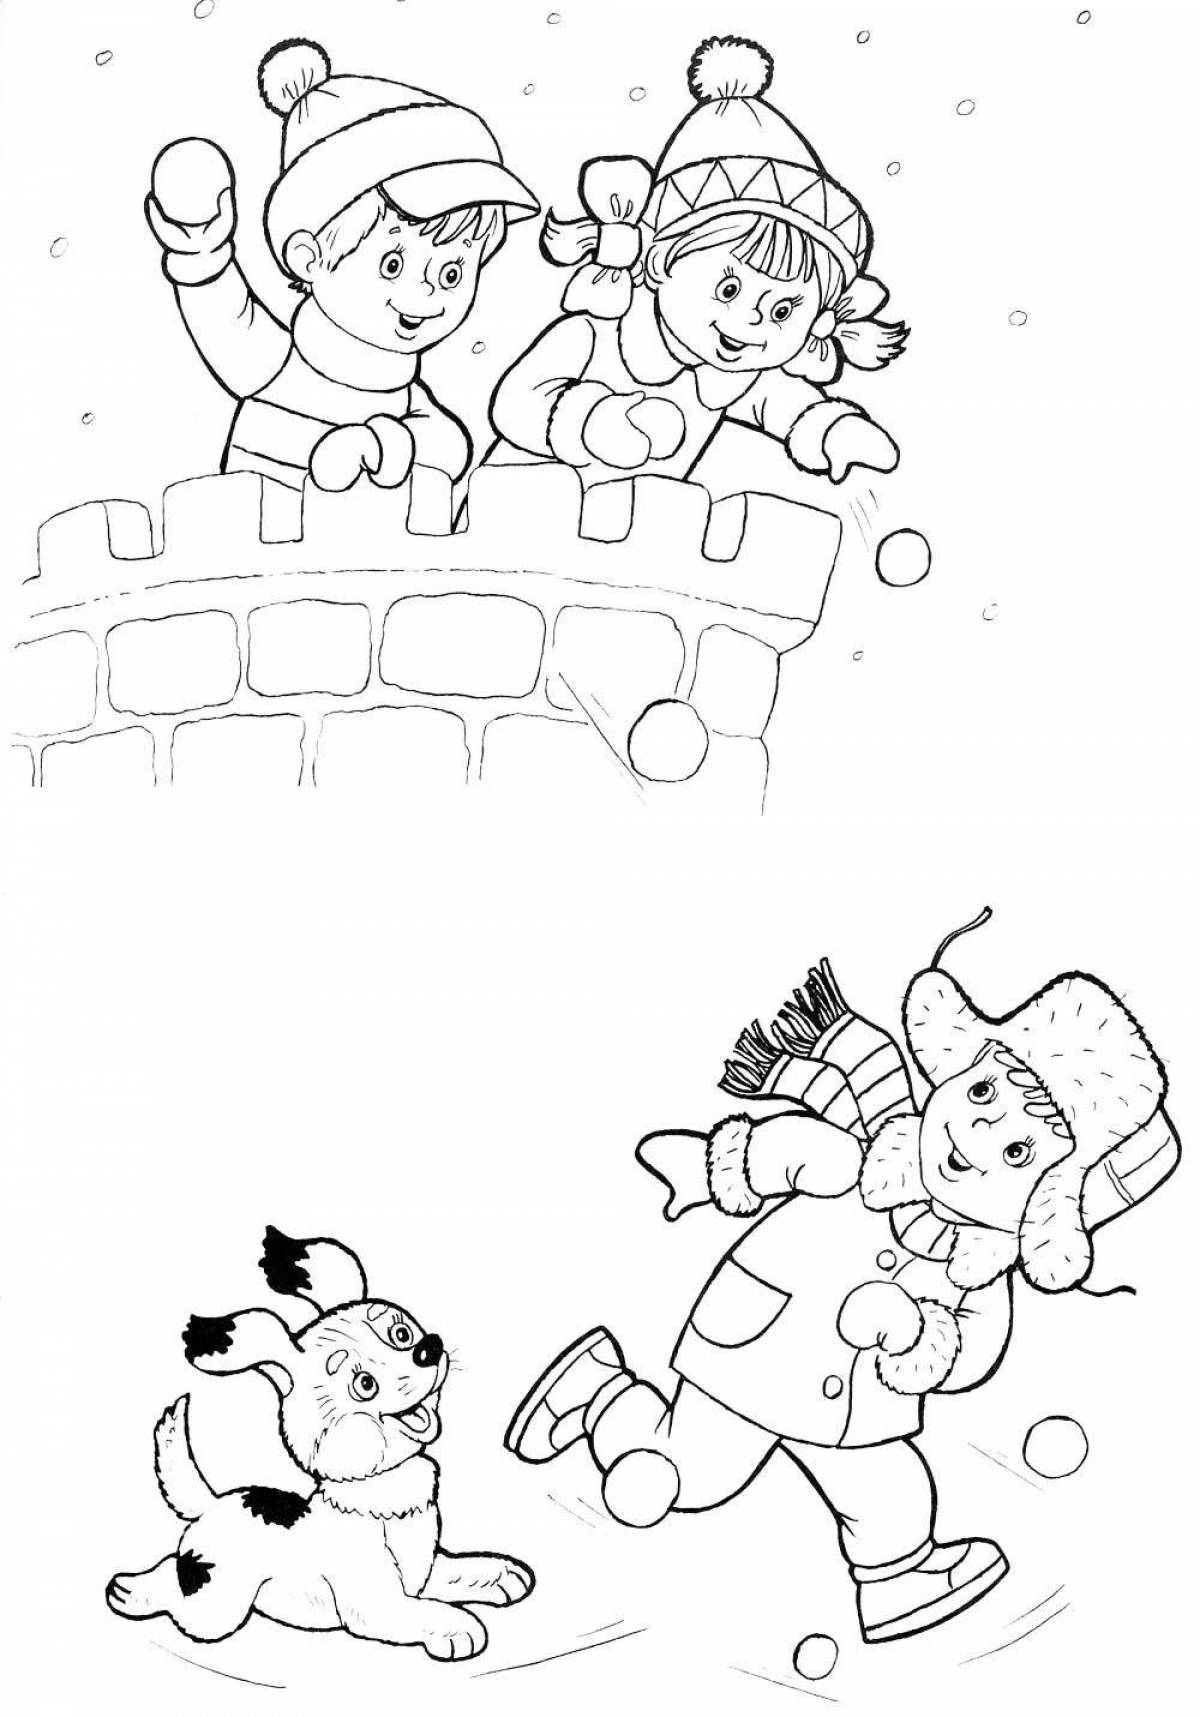 Children playing snowballs #6